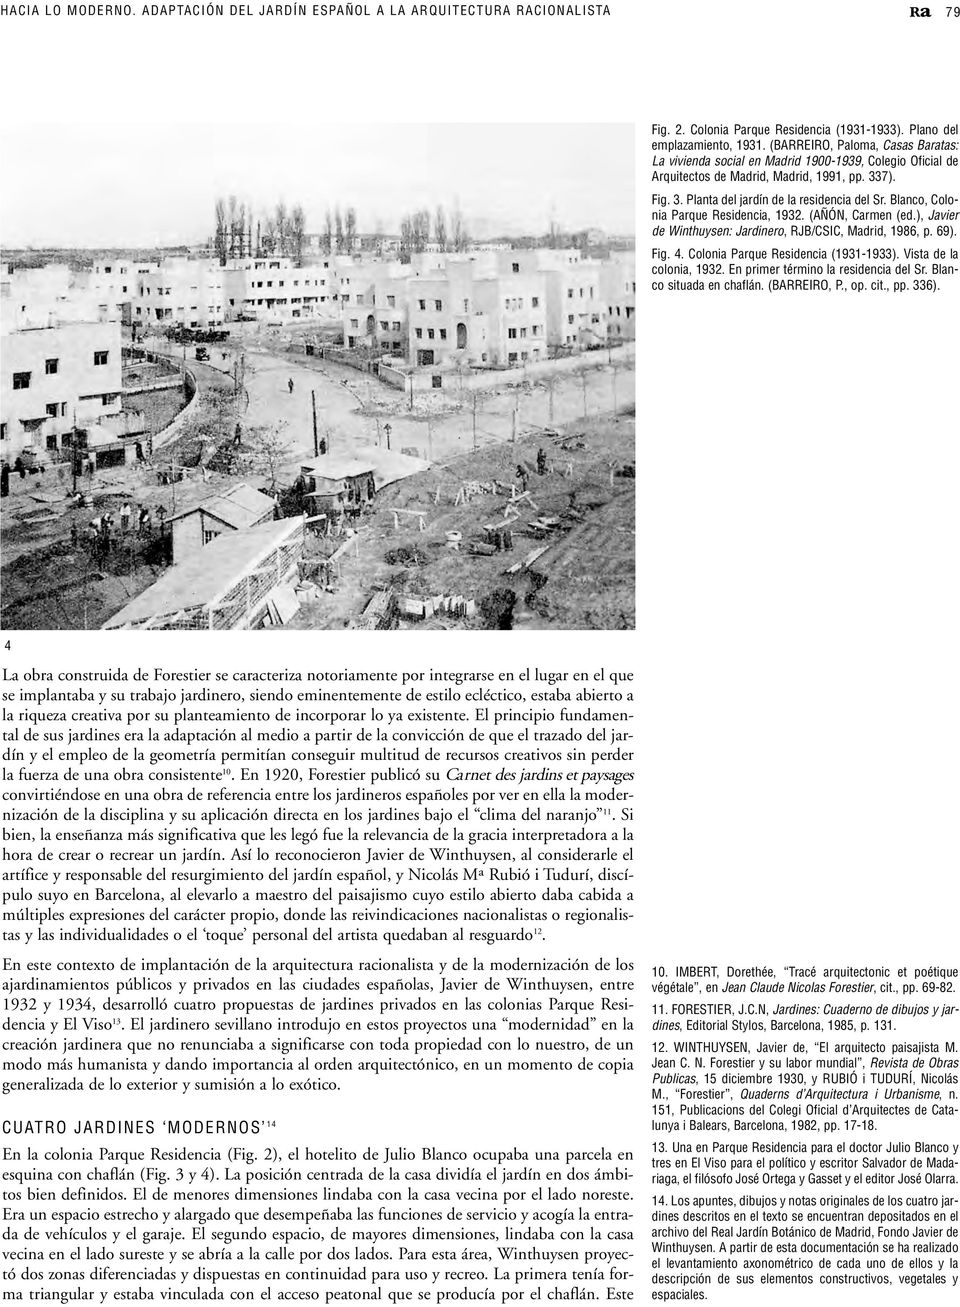 Blanco, Colonia Parque Residencia, 1932. (AÑÓN, Carmen (ed.), Javier de Winthuysen: Jardinero, RJB/CSIC, Madrid, 1986, p. 69). Fig. 4. Colonia Parque Residencia (1931-1933). Vista de la colonia, 1932.